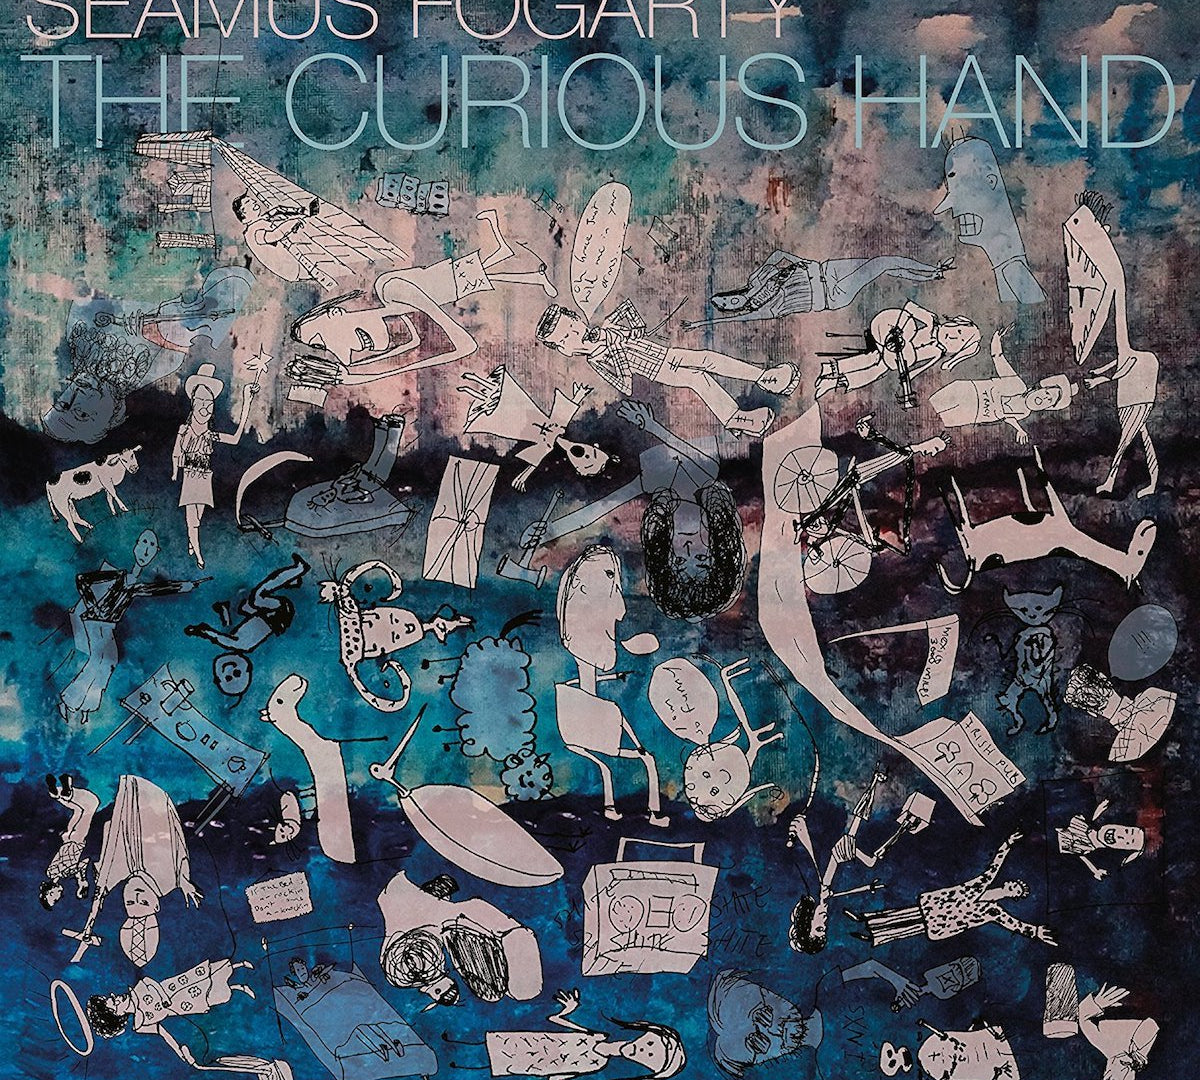 Seamus Fogarty - The Curious Hand